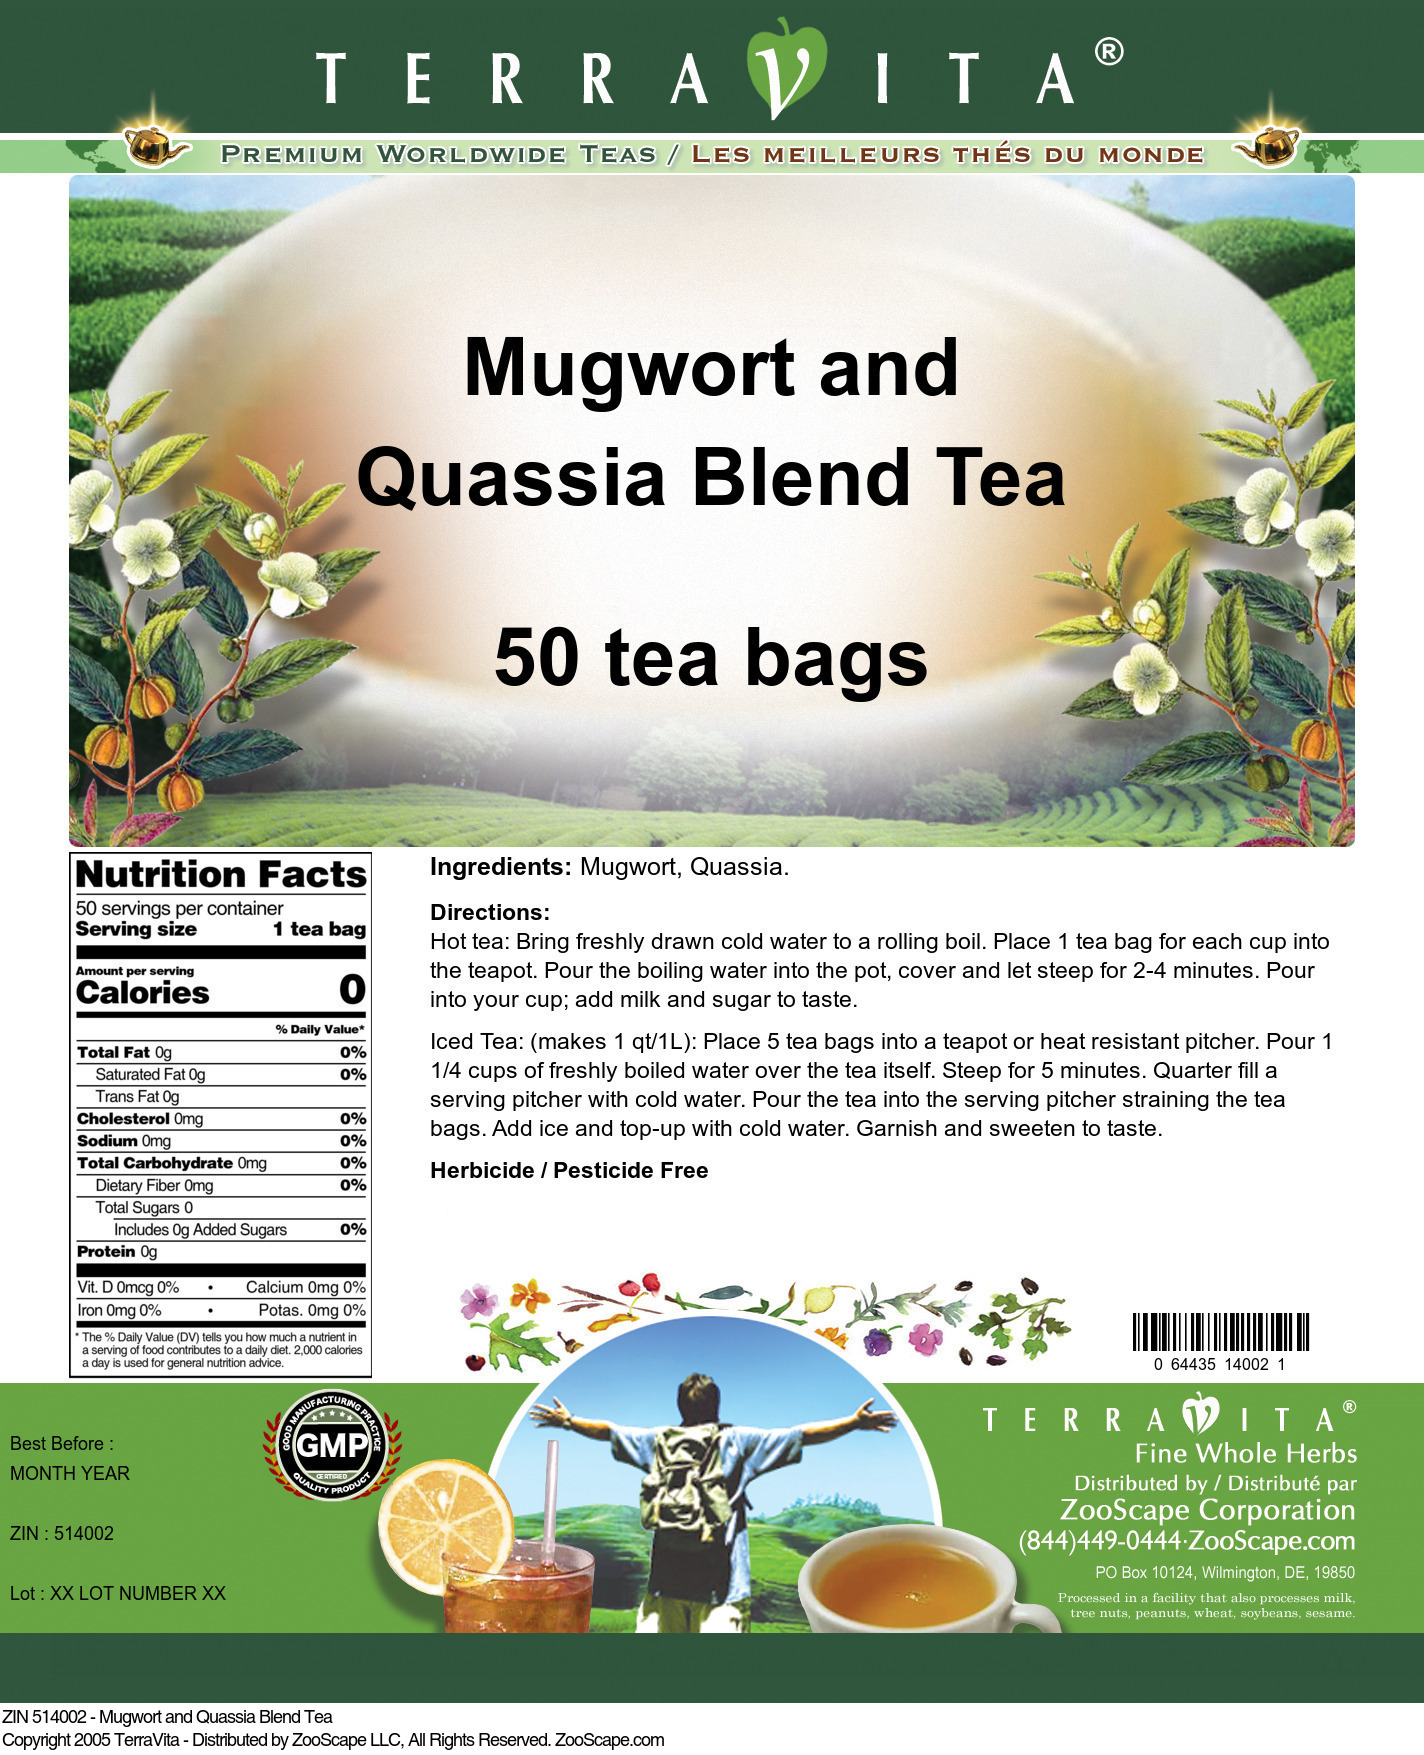 Mugwort and Quassia Blend Tea - Label